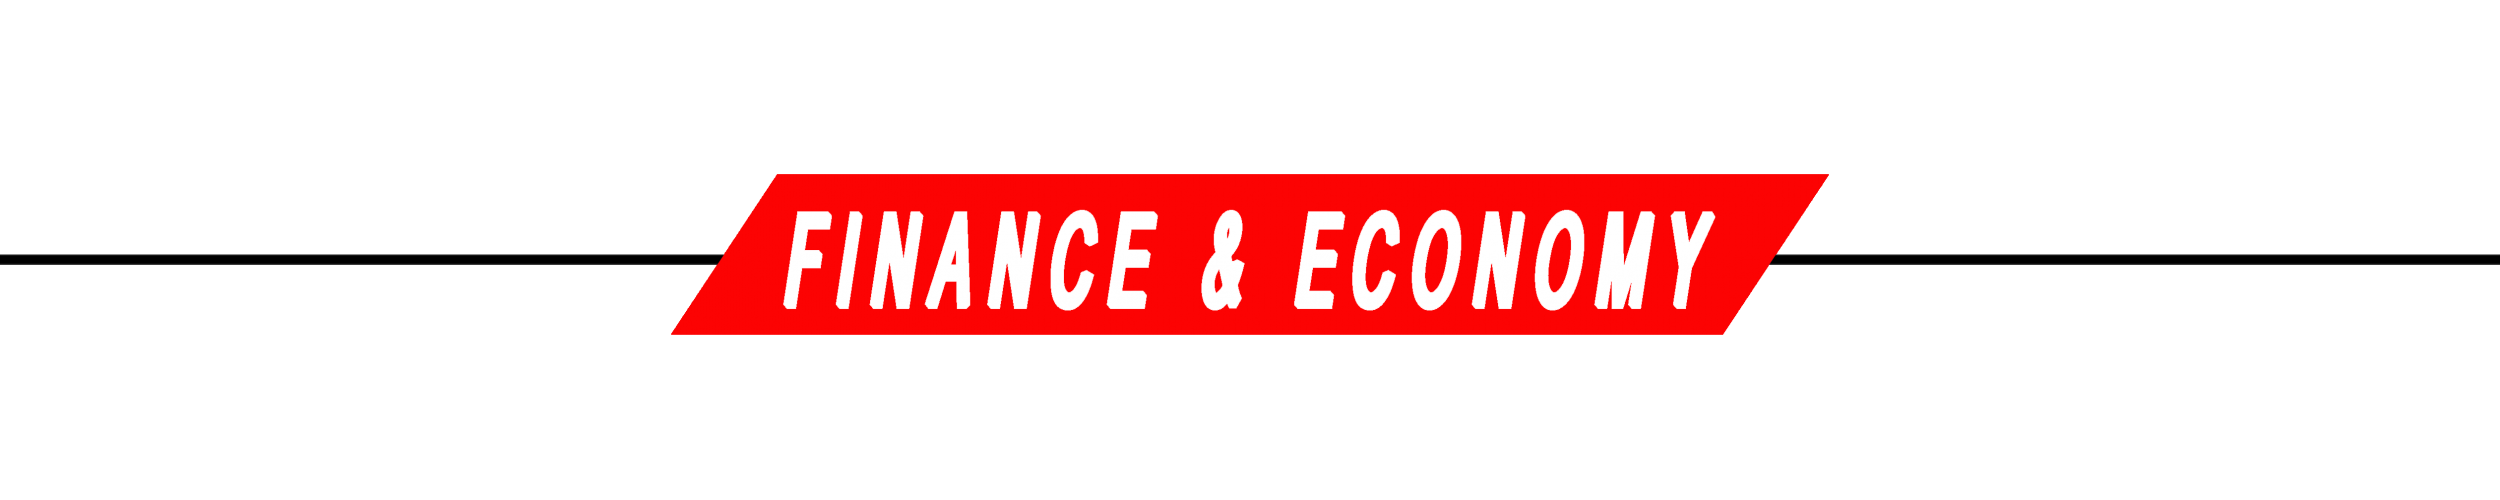 Finance & Economy